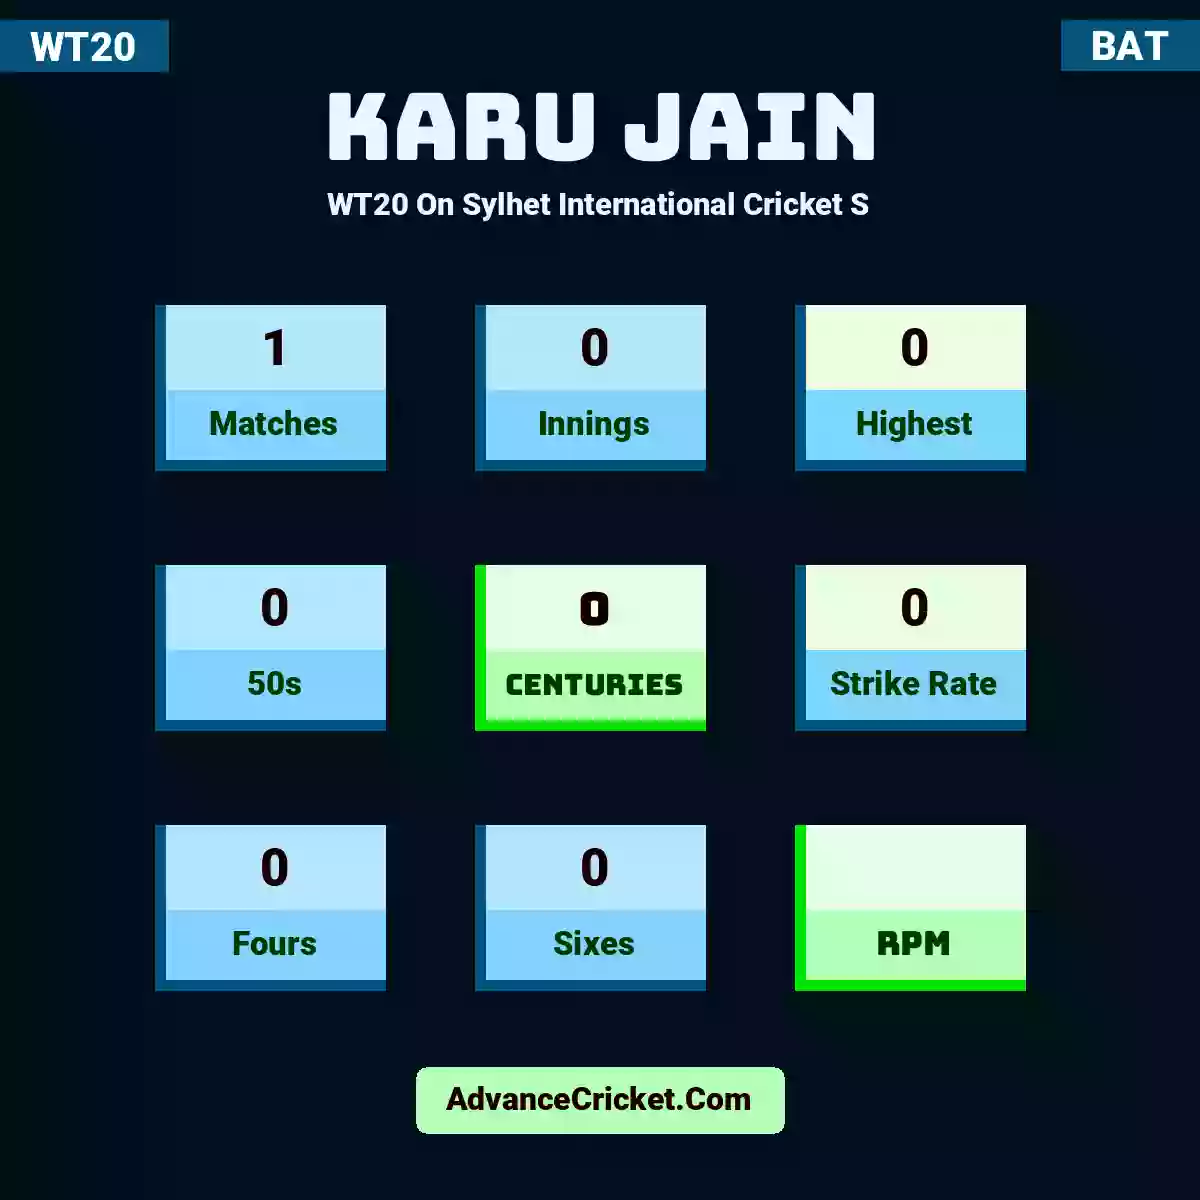 Karu Jain WT20  On Sylhet International Cricket S, Karu Jain played 1 matches, scored 0 runs as highest, 0 half-centuries, and 0 centuries, with a strike rate of 0. K.Jain hit 0 fours and 0 sixes.